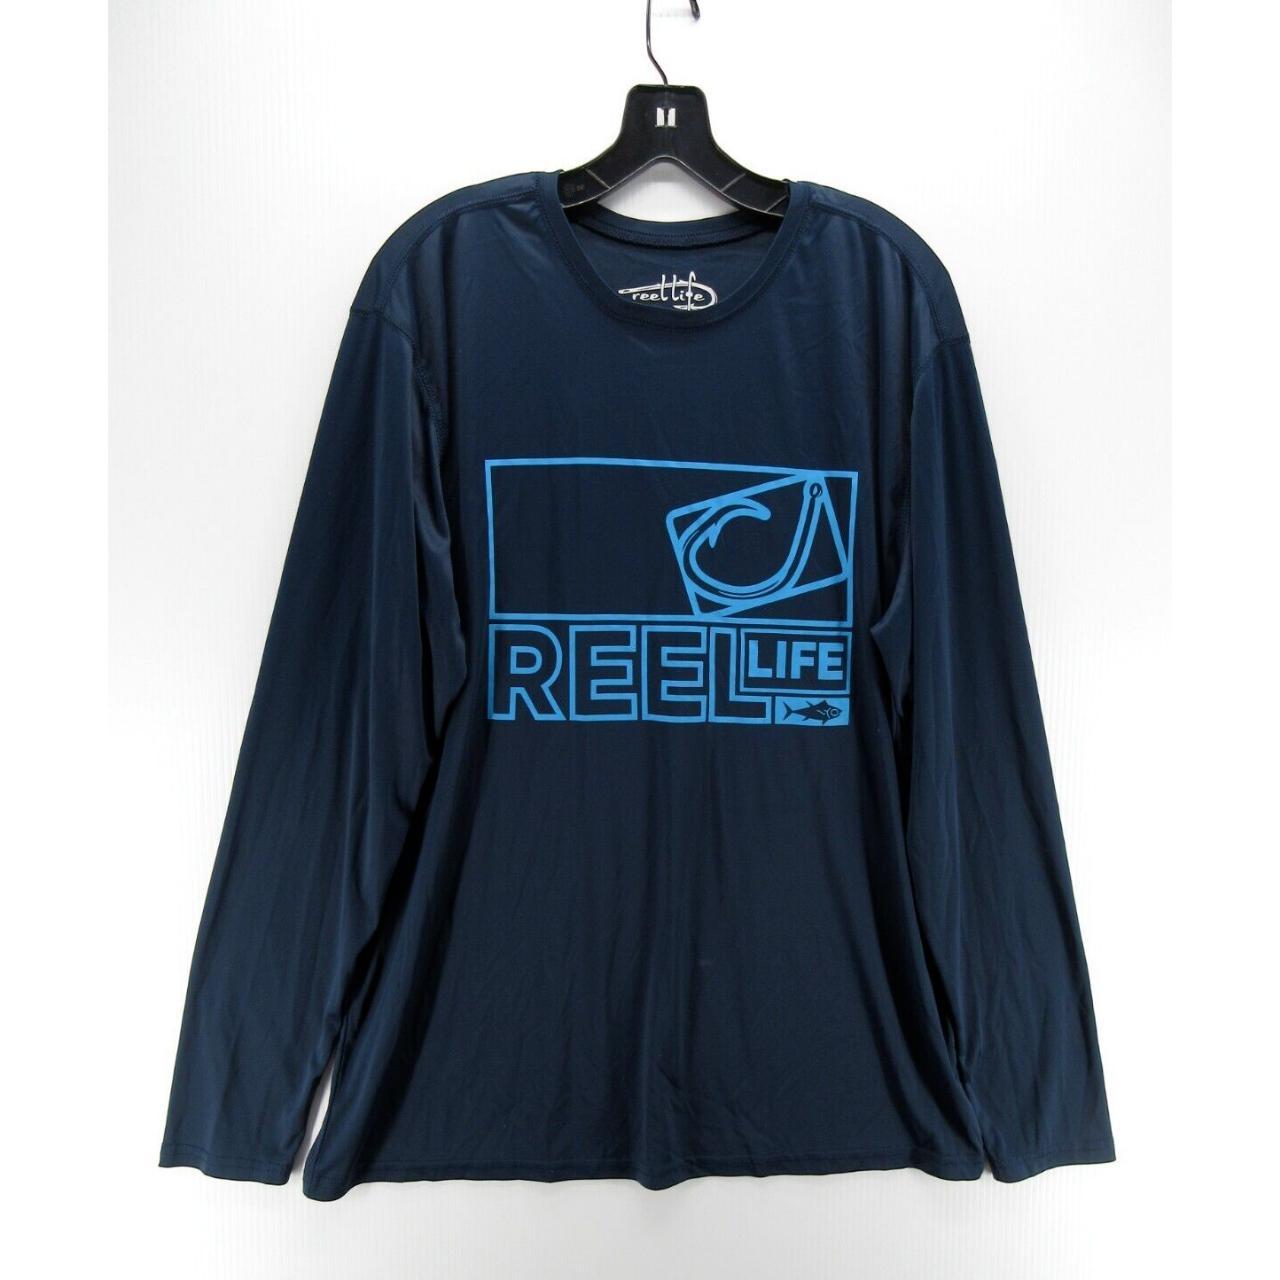 Reel Life Shirt Men XXL Blue Pullover Surfer Fishing